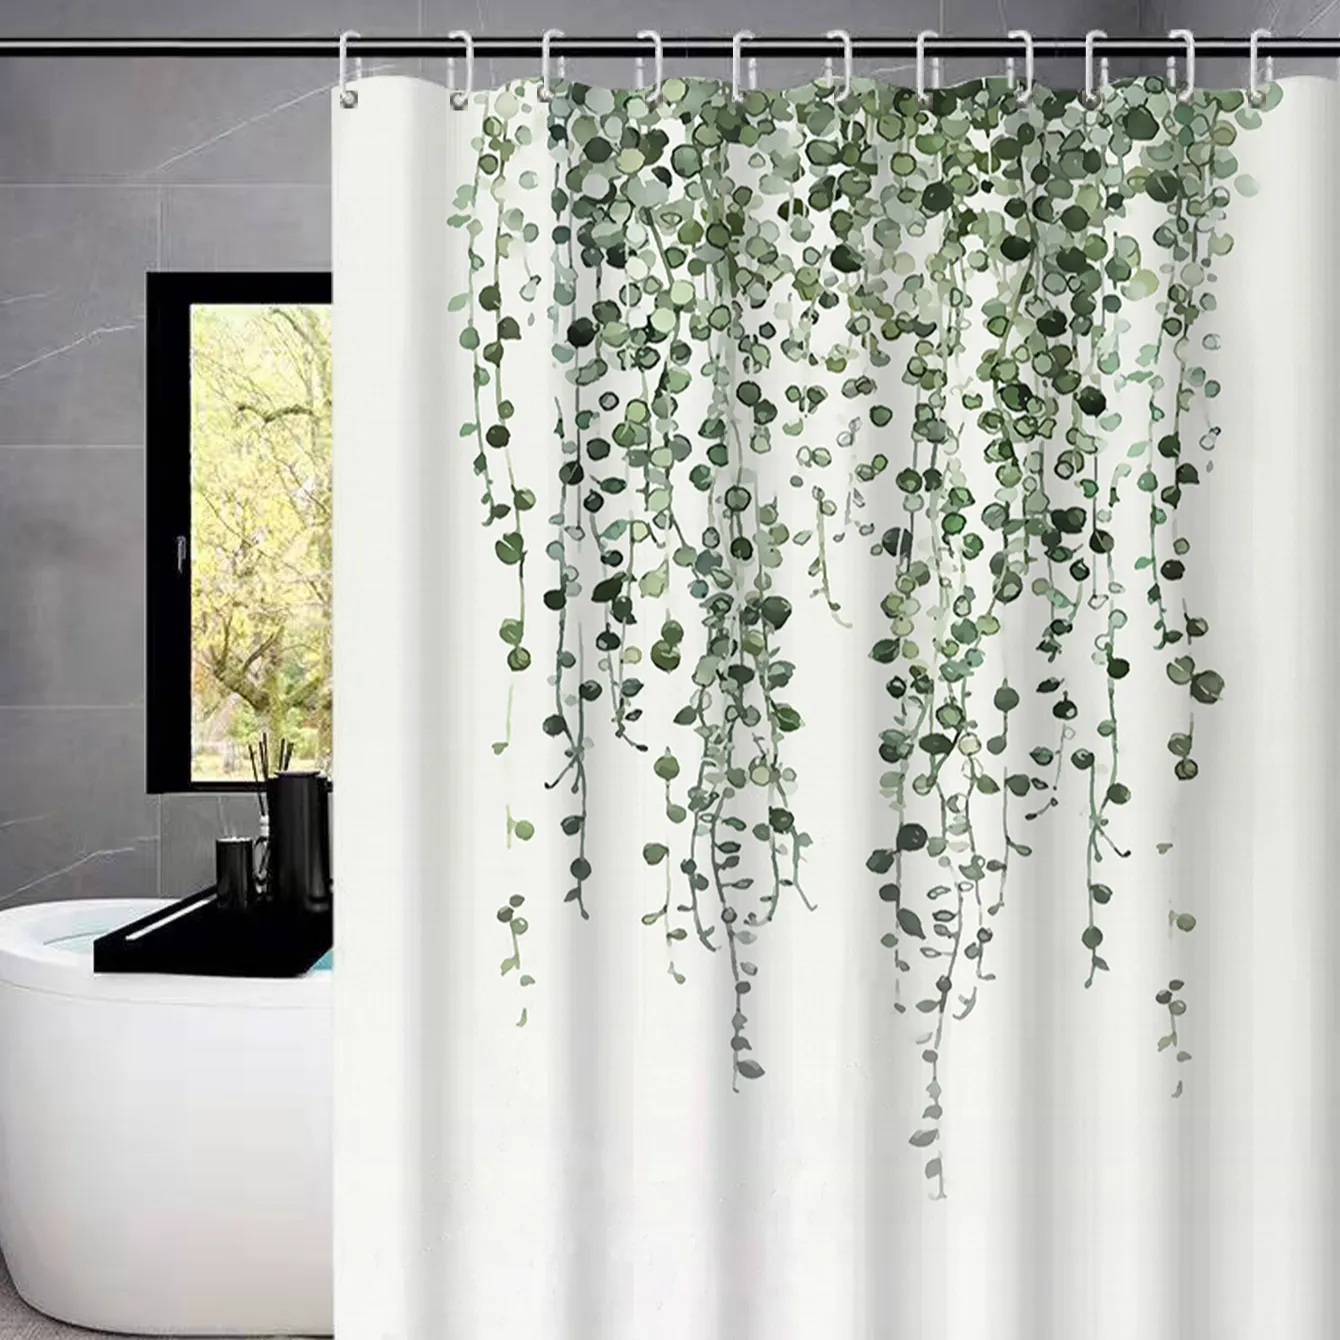 Countryside fresh style waterproof shower curtain flower tree printed bathroom decorative shower curtain